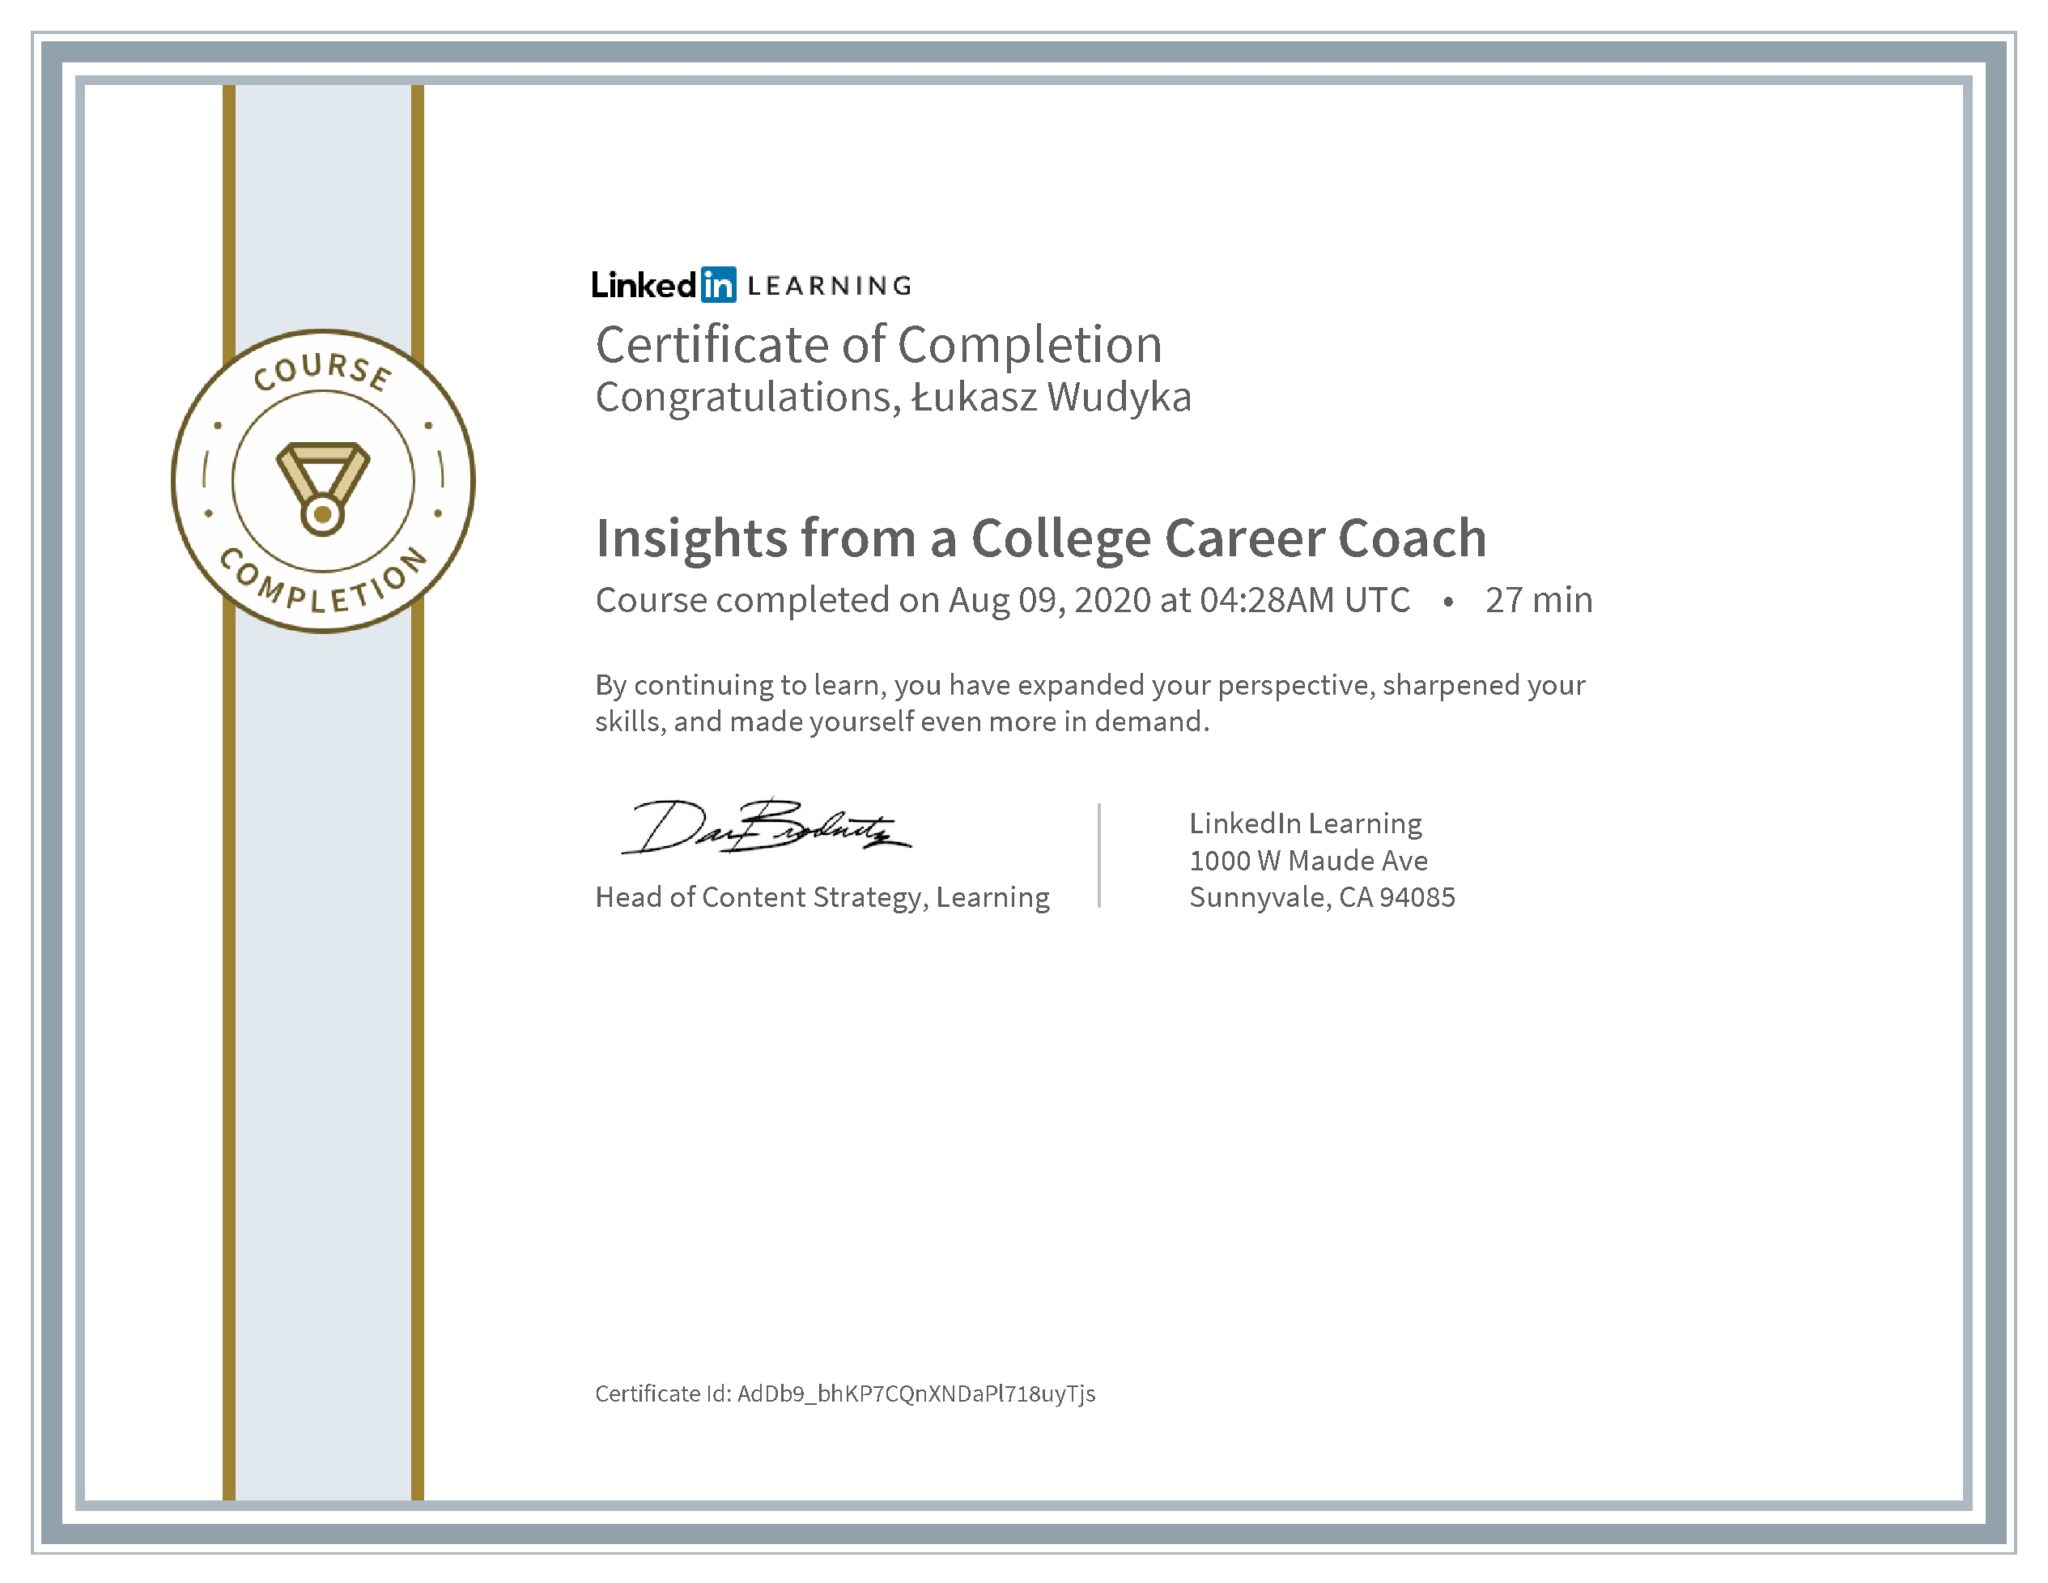 Łukasz Wudyka certyfikat LinkedIn Insights from a College Career Coach